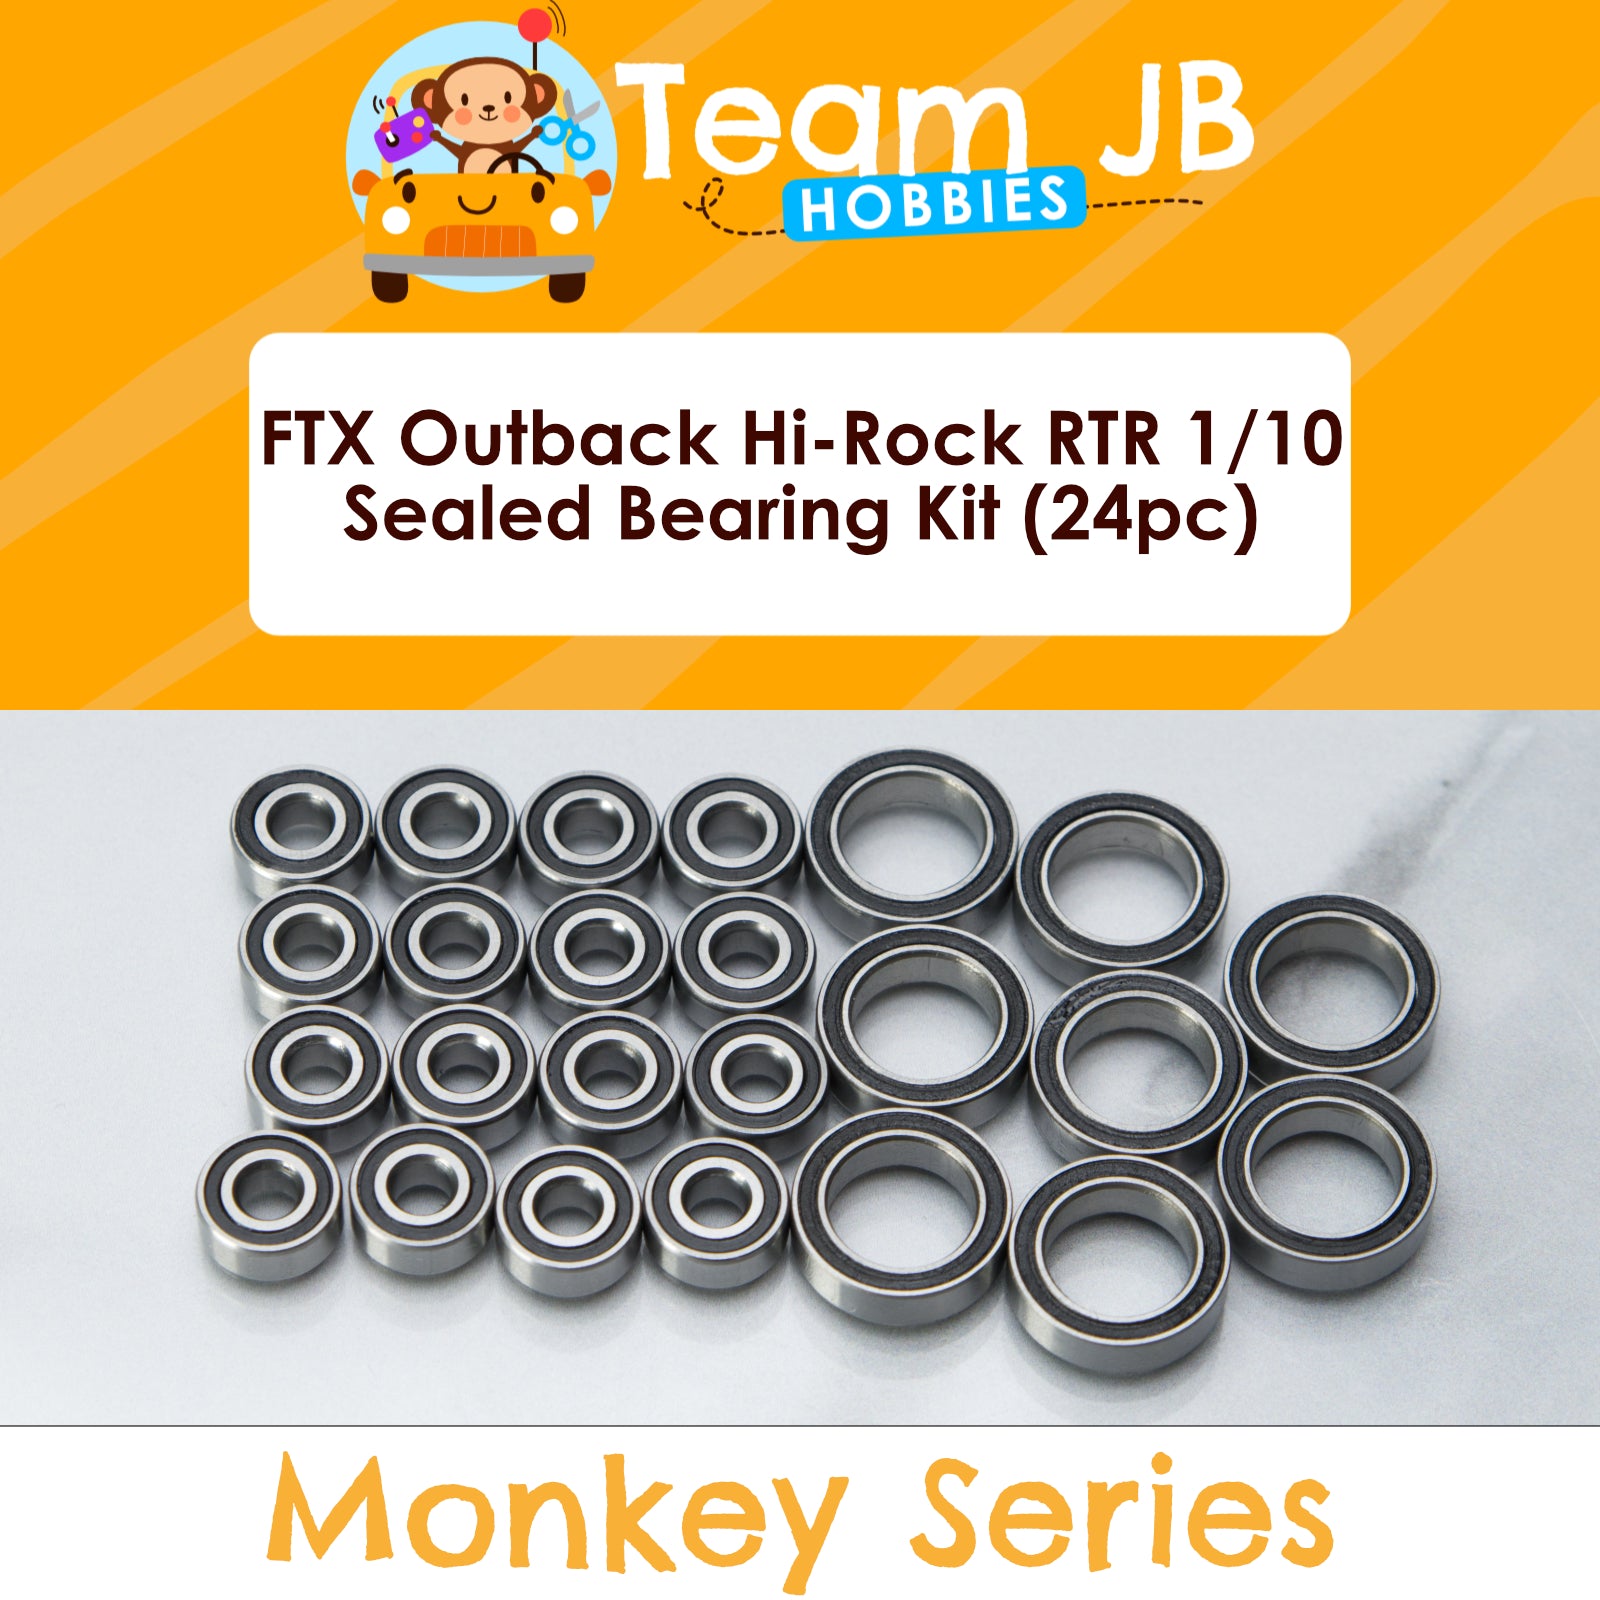 FTX Outback Hi-Rock RTR 1/10 - Sealed Bearing Kit